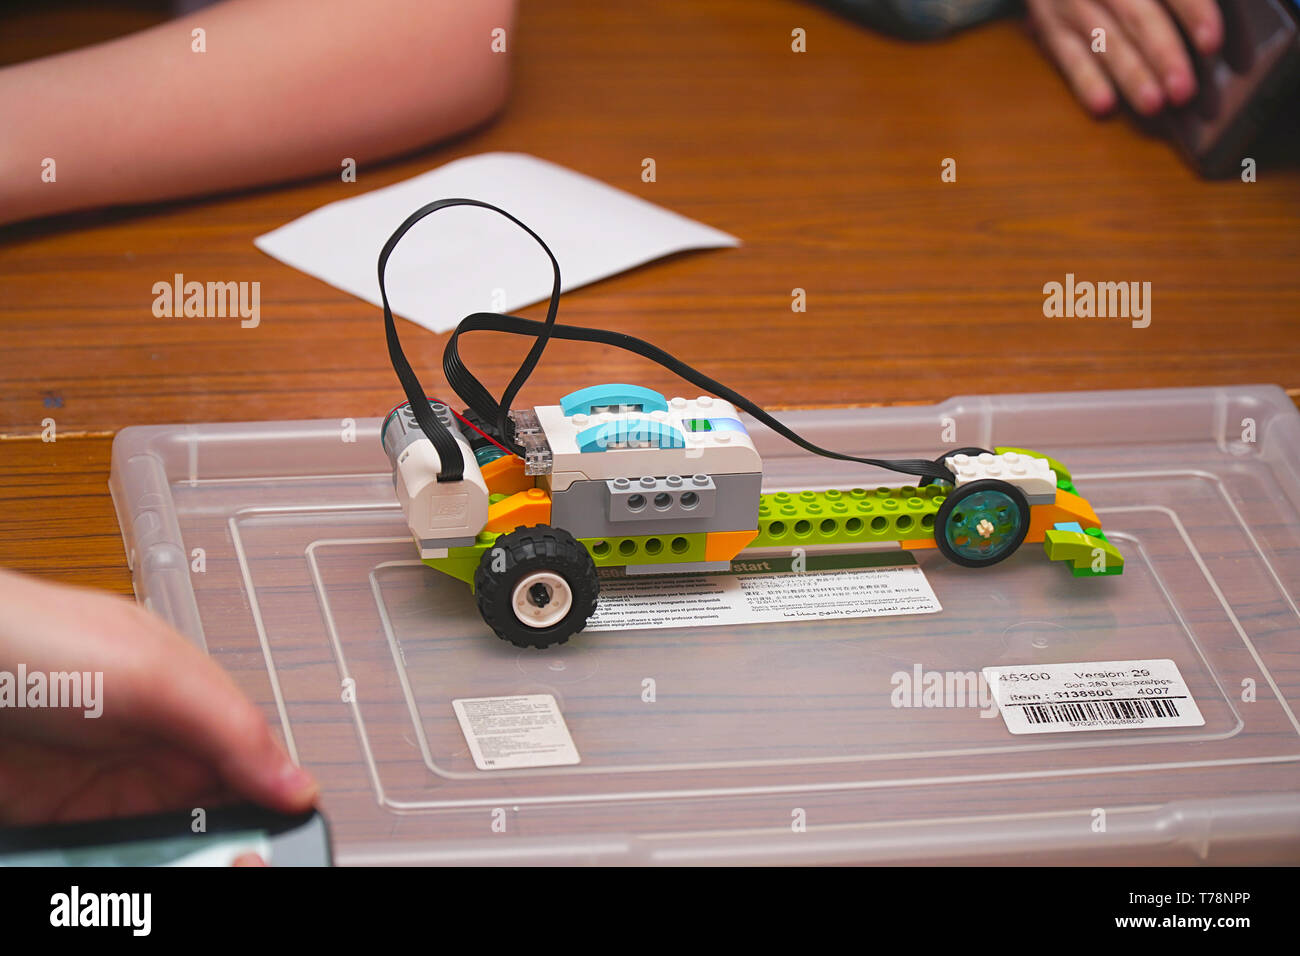 Lego car model Stock Photo - Alamy